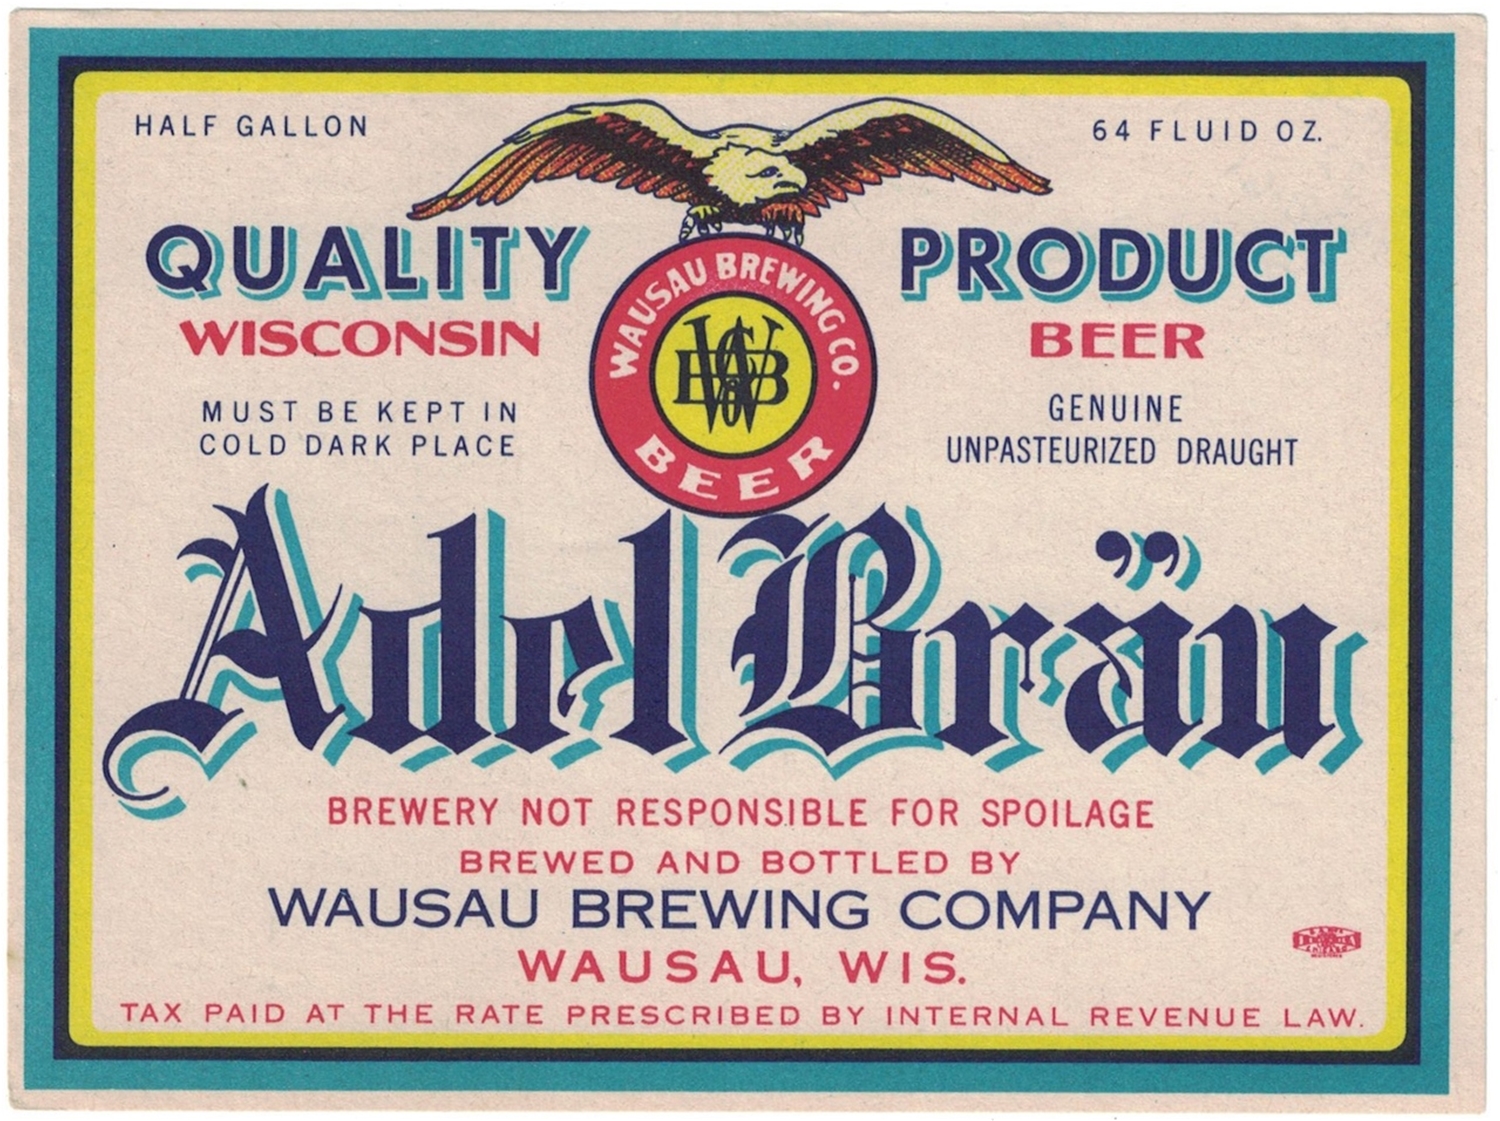 Adel Brau IRTP Beer Label